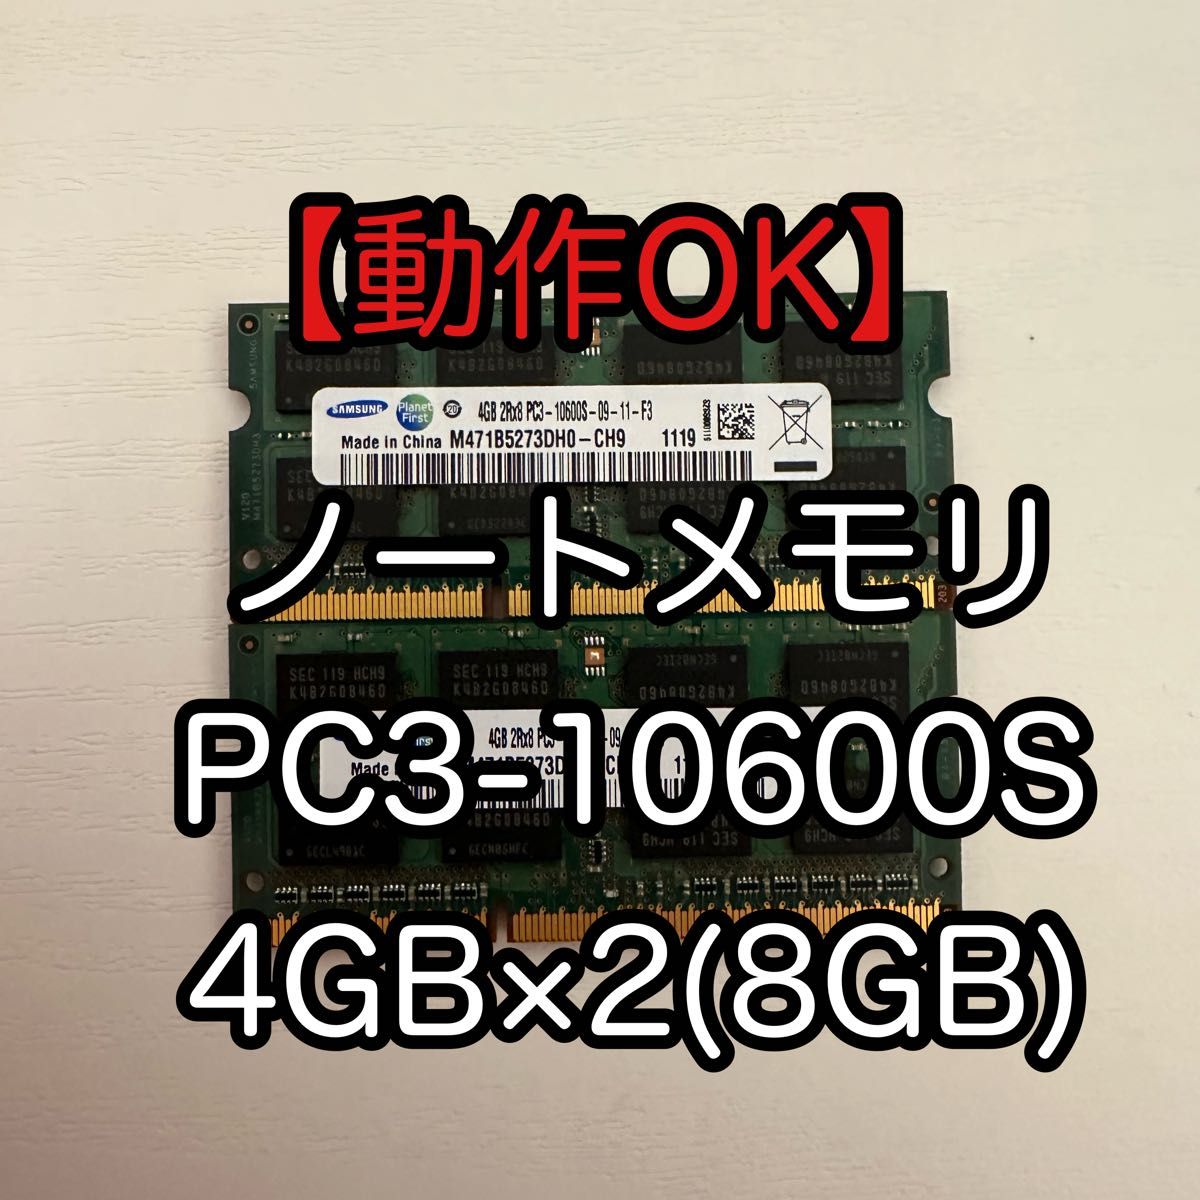 PC3-10600S 4GB×2(8GB) ノートメモリ